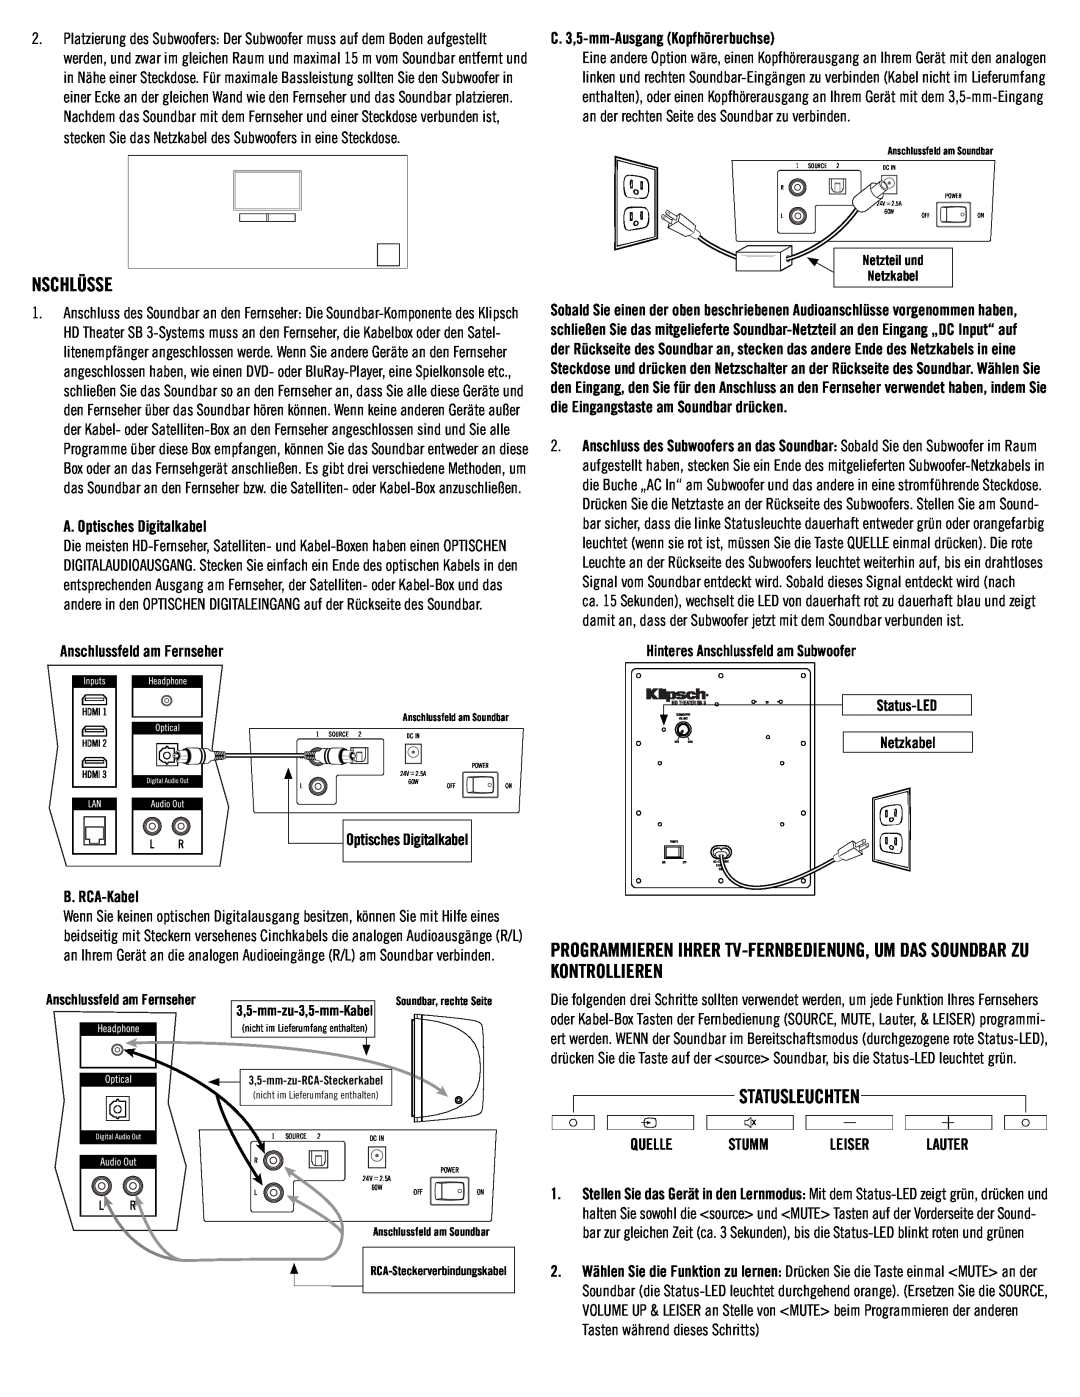 Klipsch SB3 A. Optisches Digitalkabel, Anschlussfeld am Fernseher, B. RCA-Kabel, C. 3,5-mm-AusgangKopfhörerbuchse, Quelle 